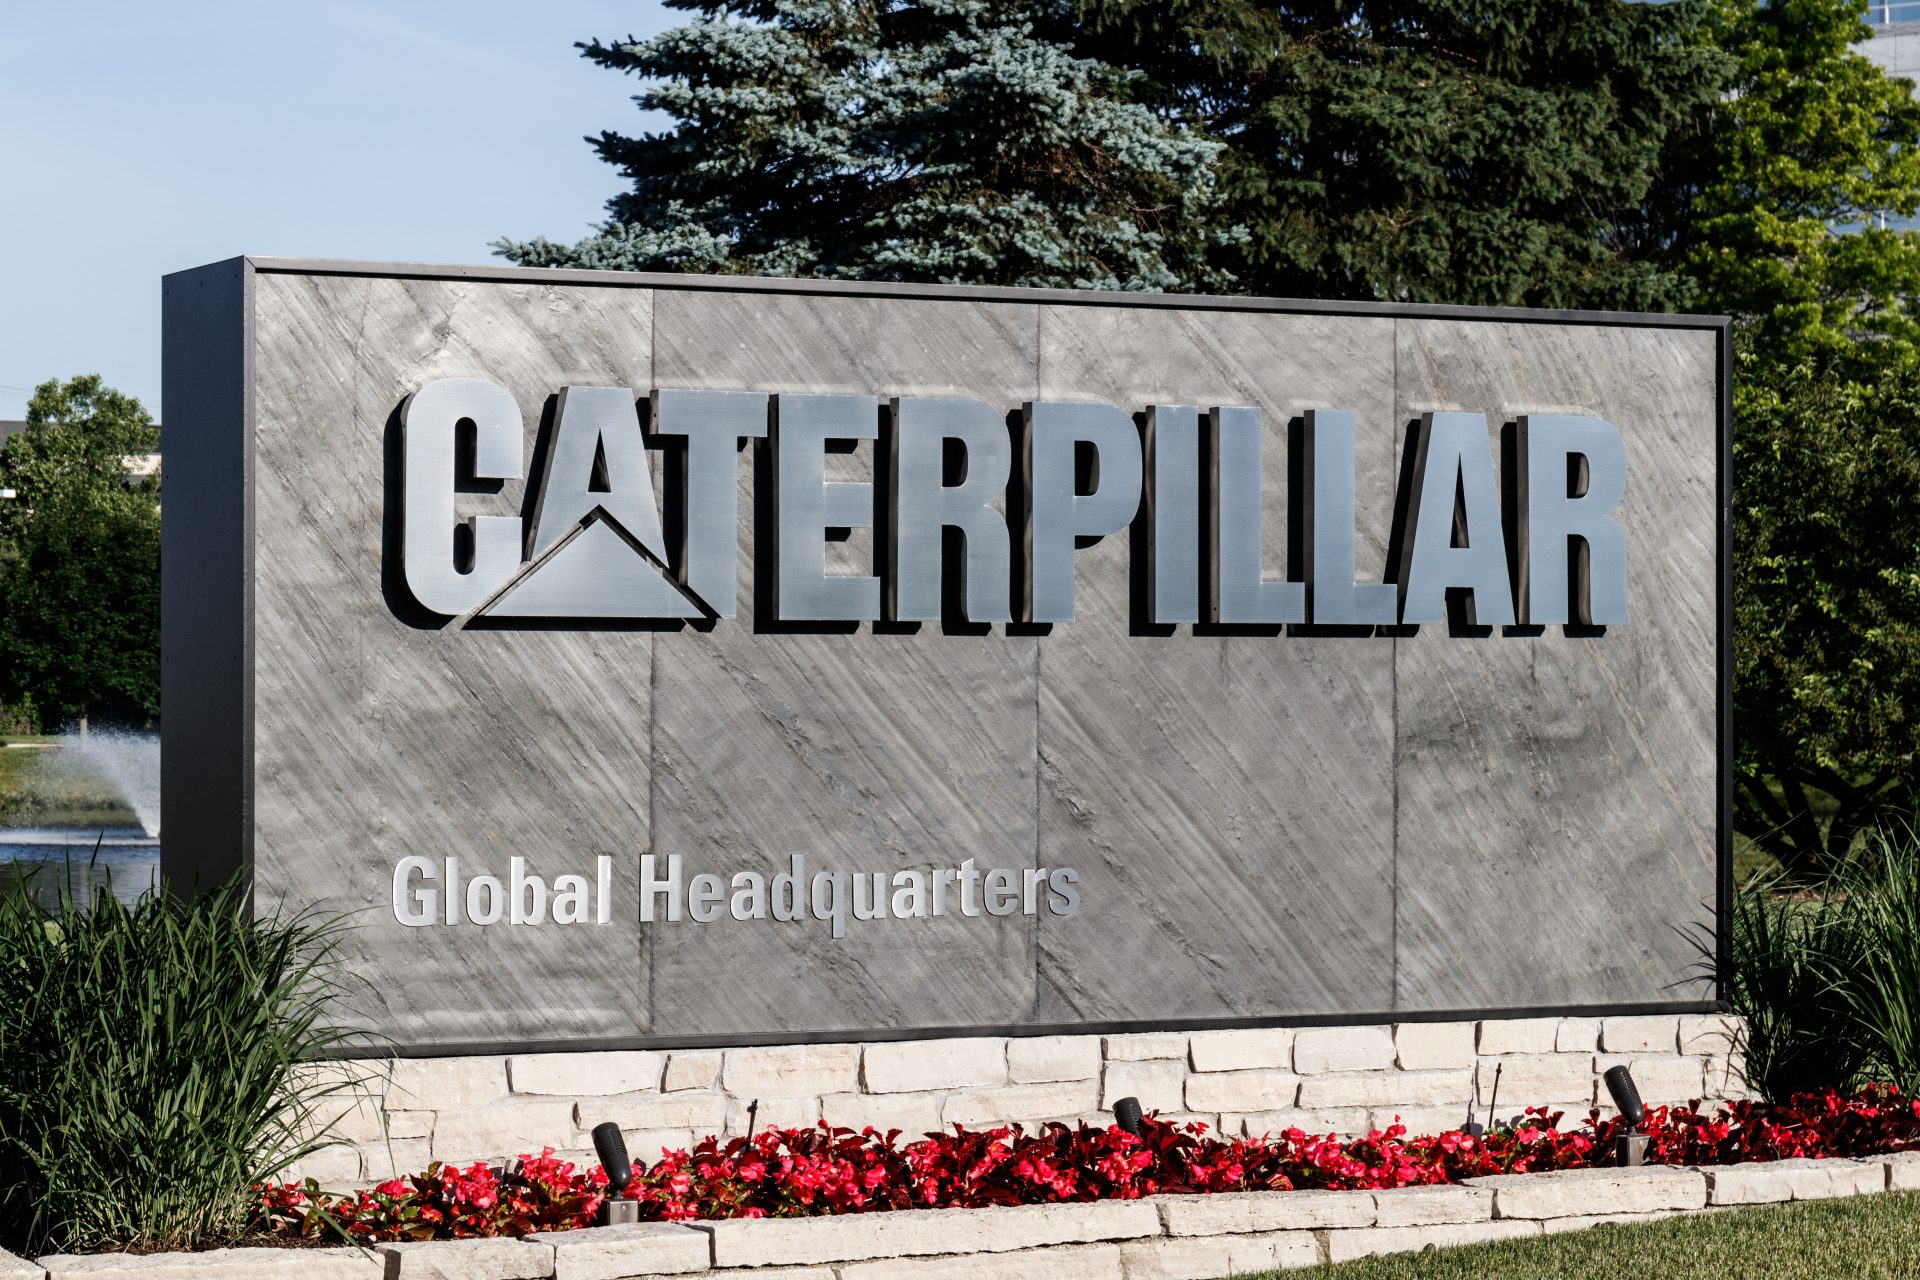 Caterpillar global headquarters.